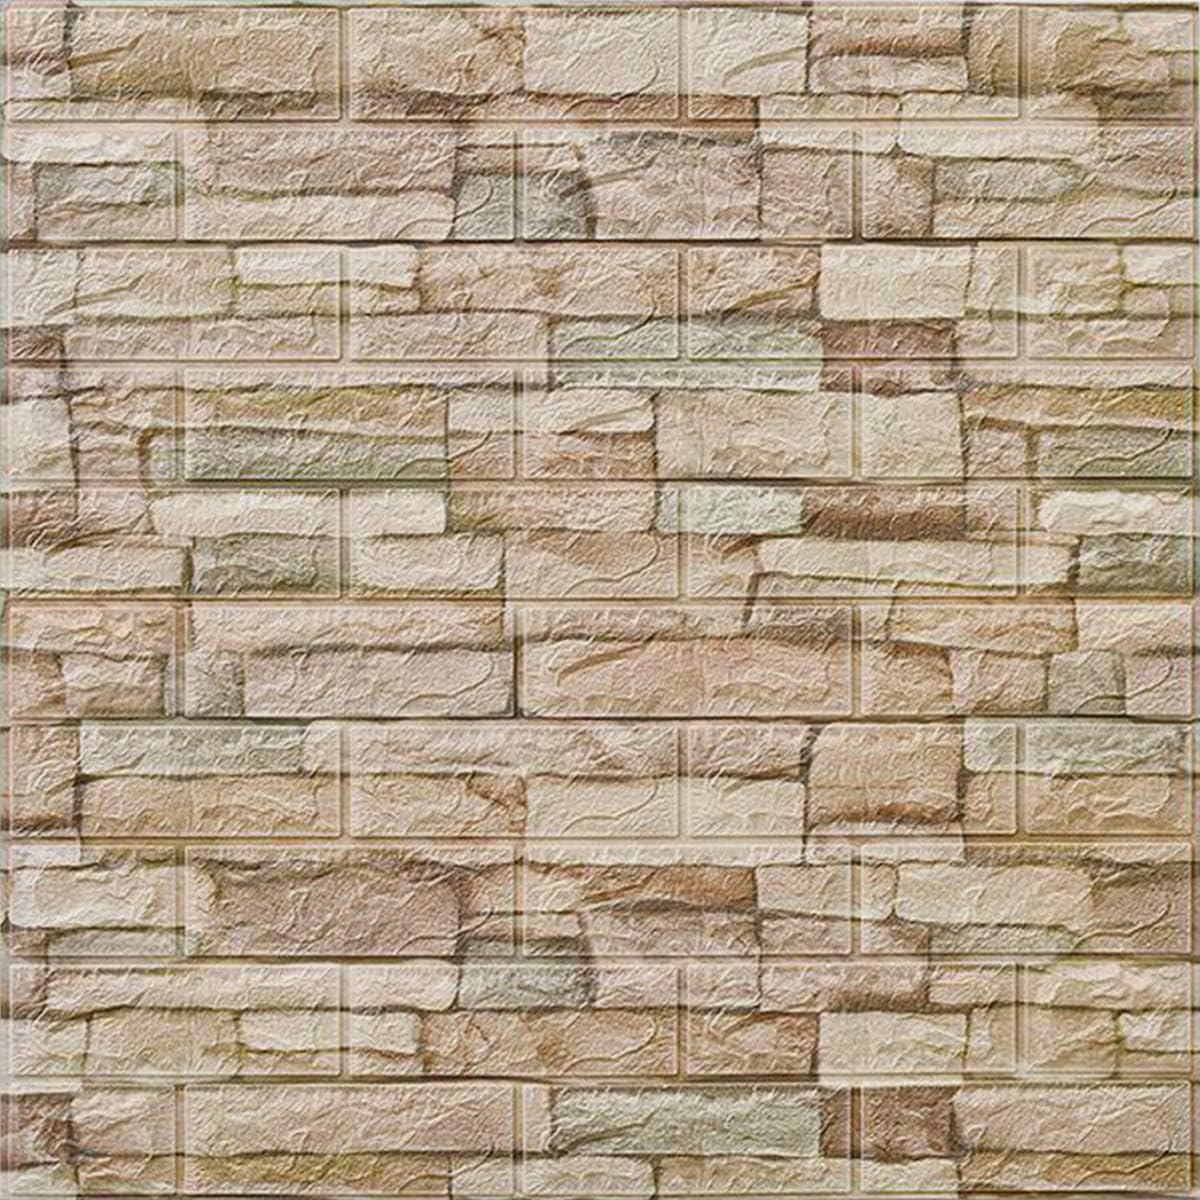 cozylkx 3D Self Adhesive Foam Wall Panels, 10 Tiles Cover 57 sq feet, Peel and Stick Brick Wallpaper for Living Room Bedroom Wall Decor